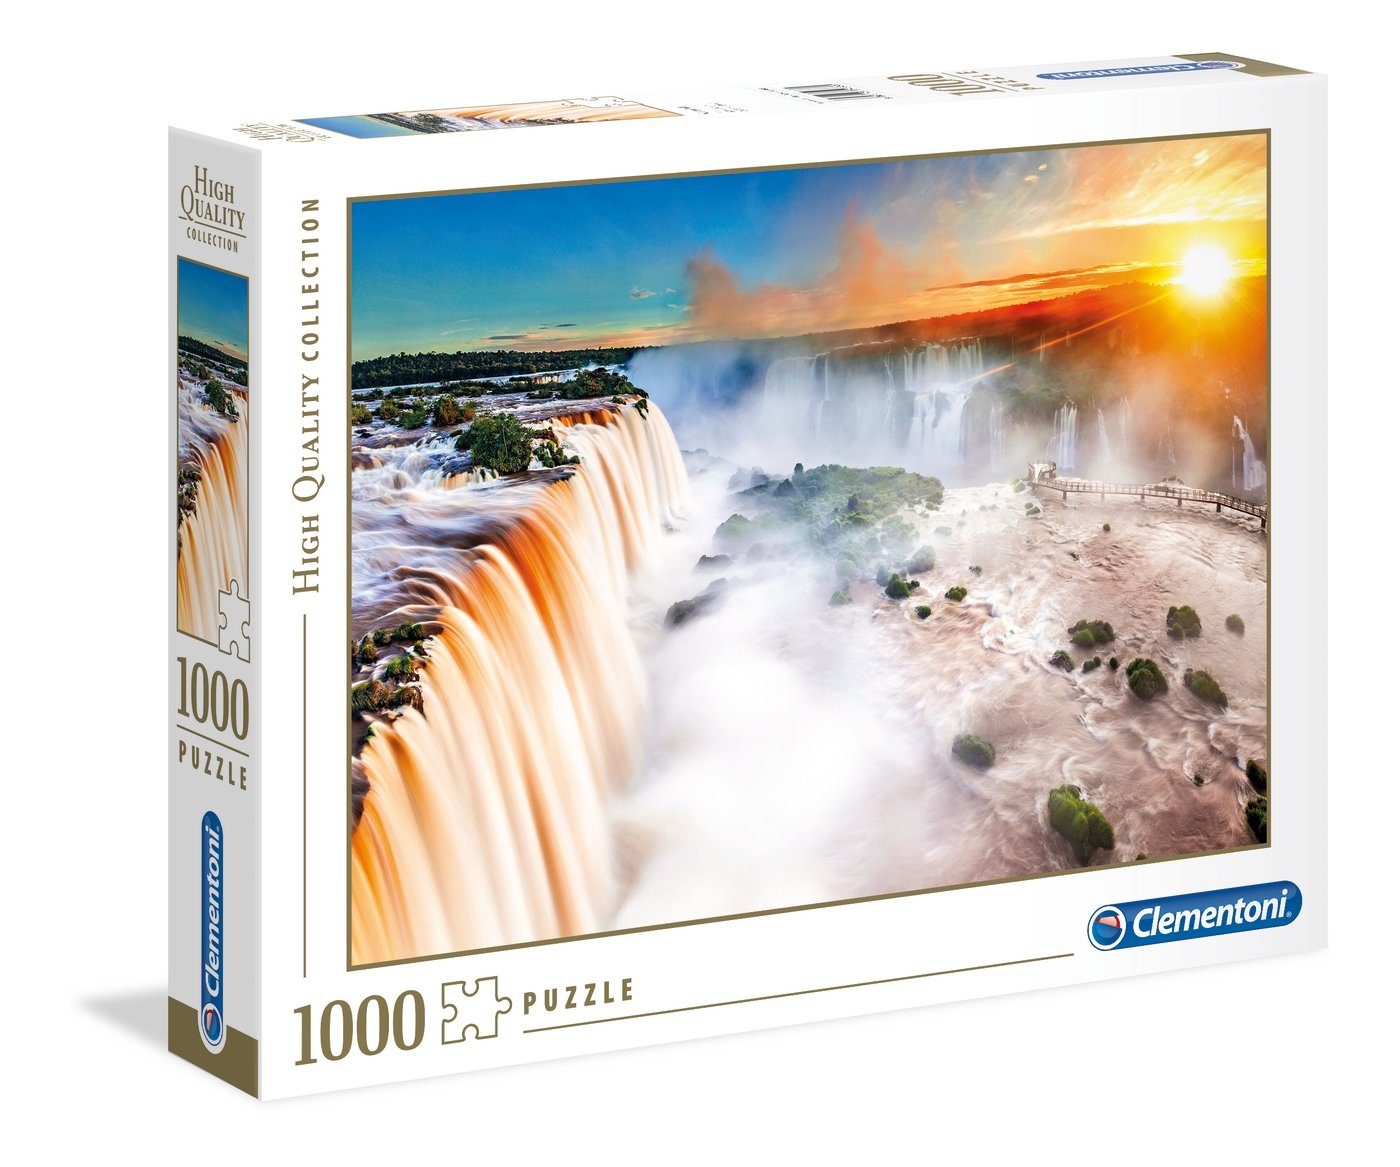 Clementoni® Puzzle Clementoni 39385 Wasserfall 1000 Teile Puzzle, 1000 Puzzleteile